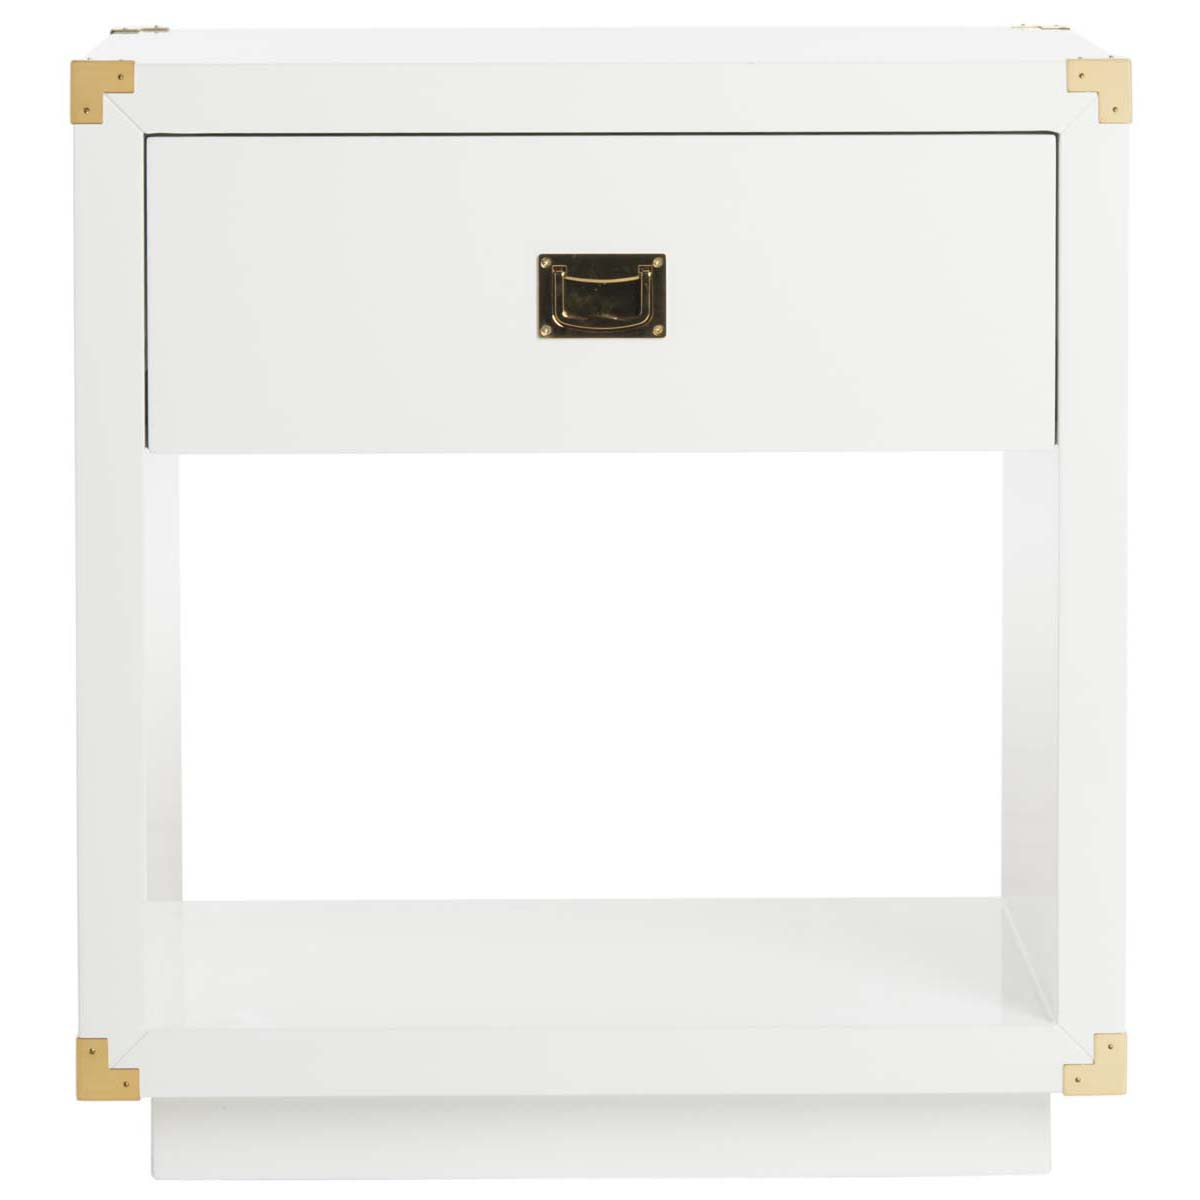 Safavieh Couture Lella Lacquer Side Table - White